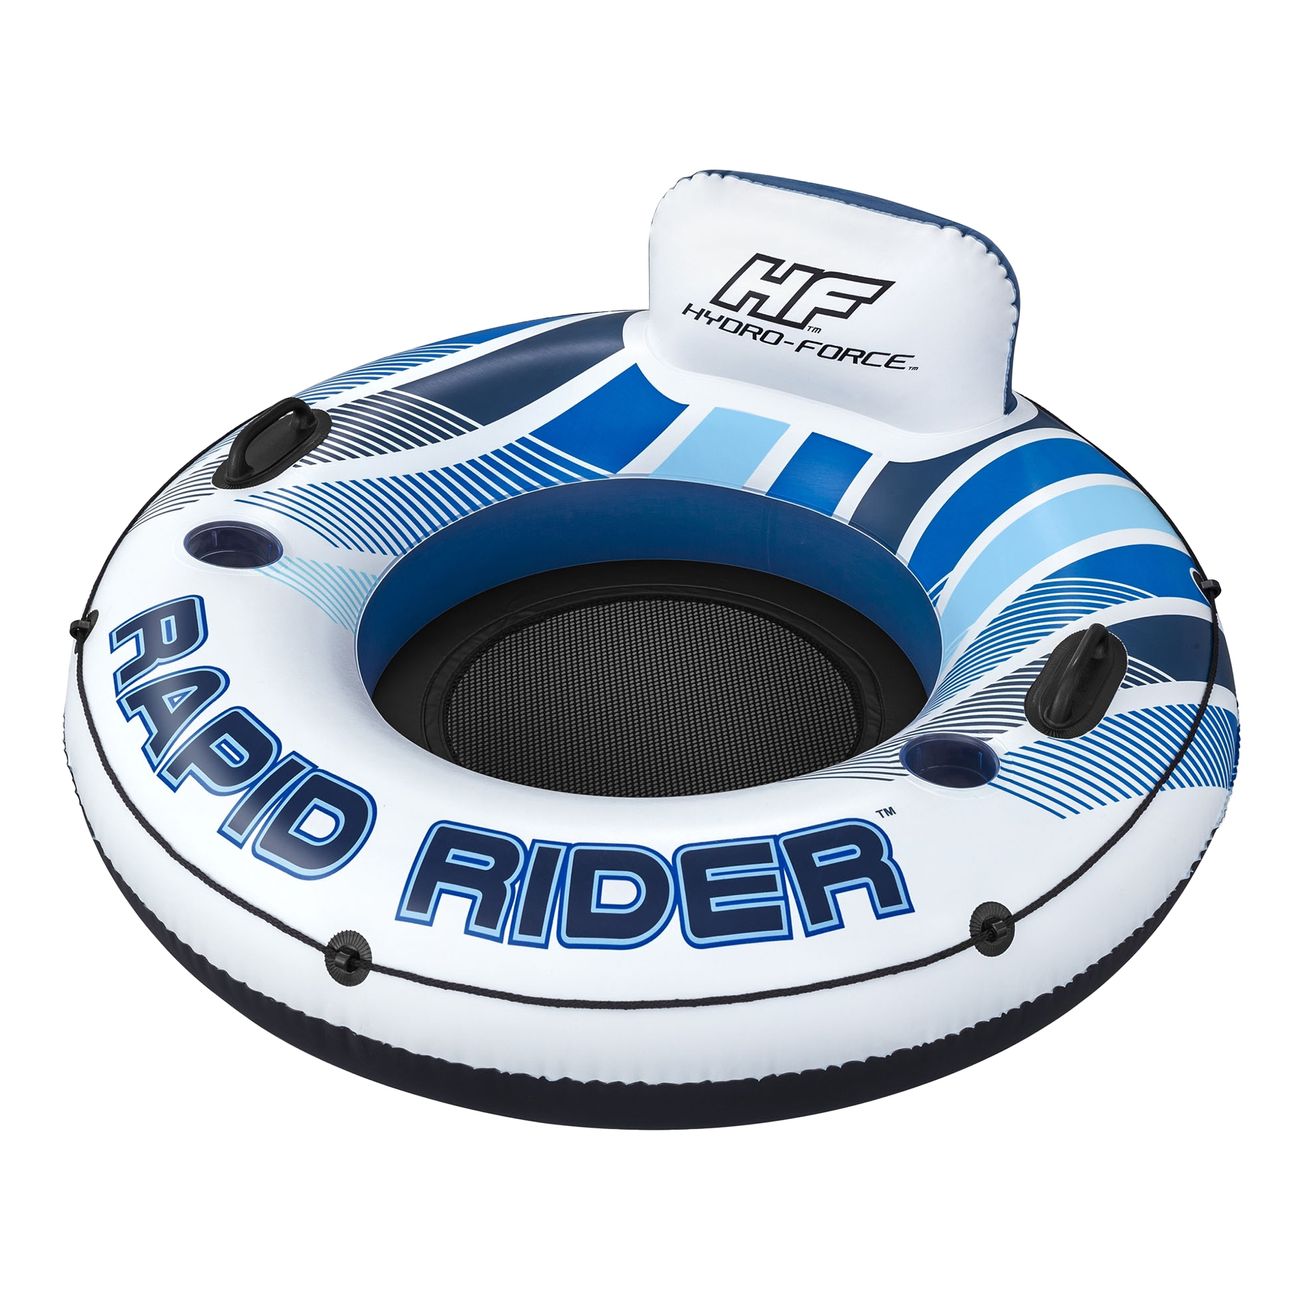 hydro-force-rapid-rider-f135-m-94881-1